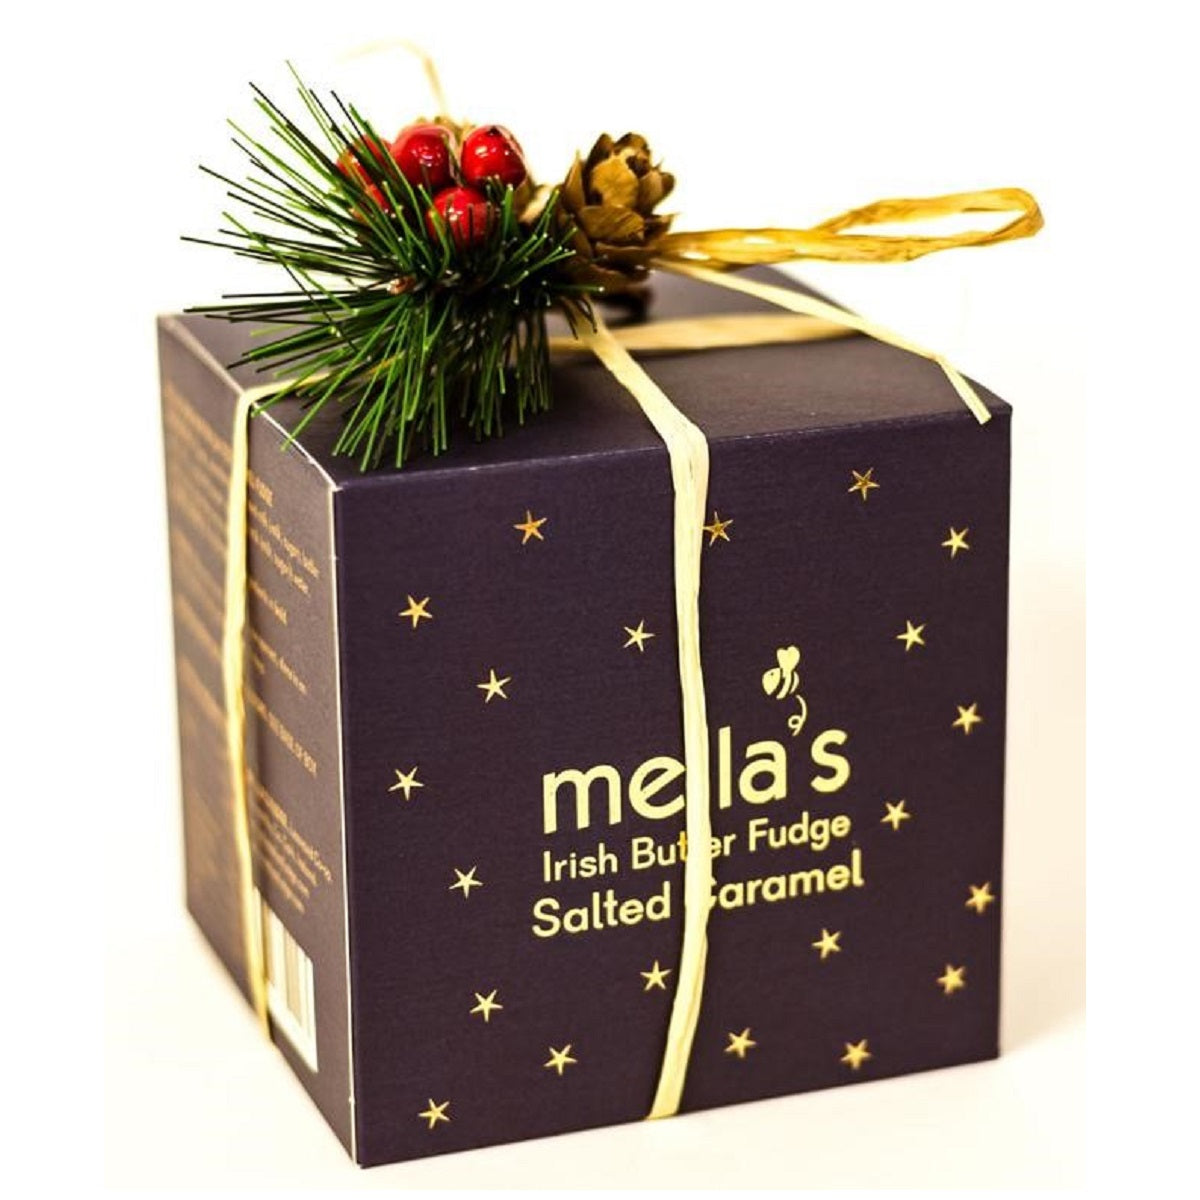 Mella's Irish Butter Fudge Salted Caramel Gift Box 300g